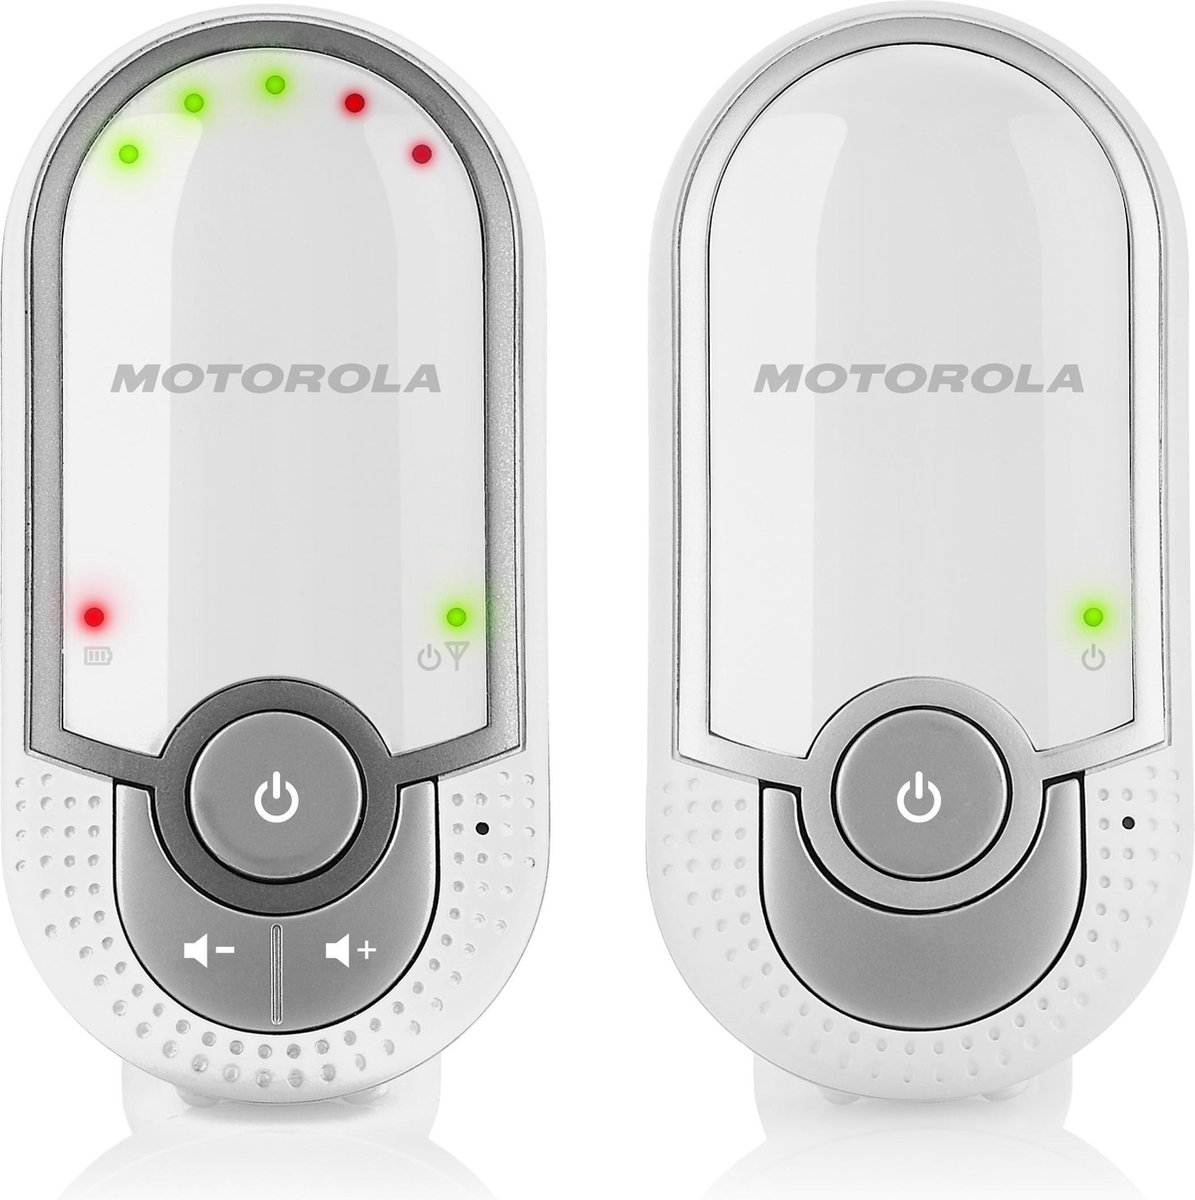 Motorola babyfoon